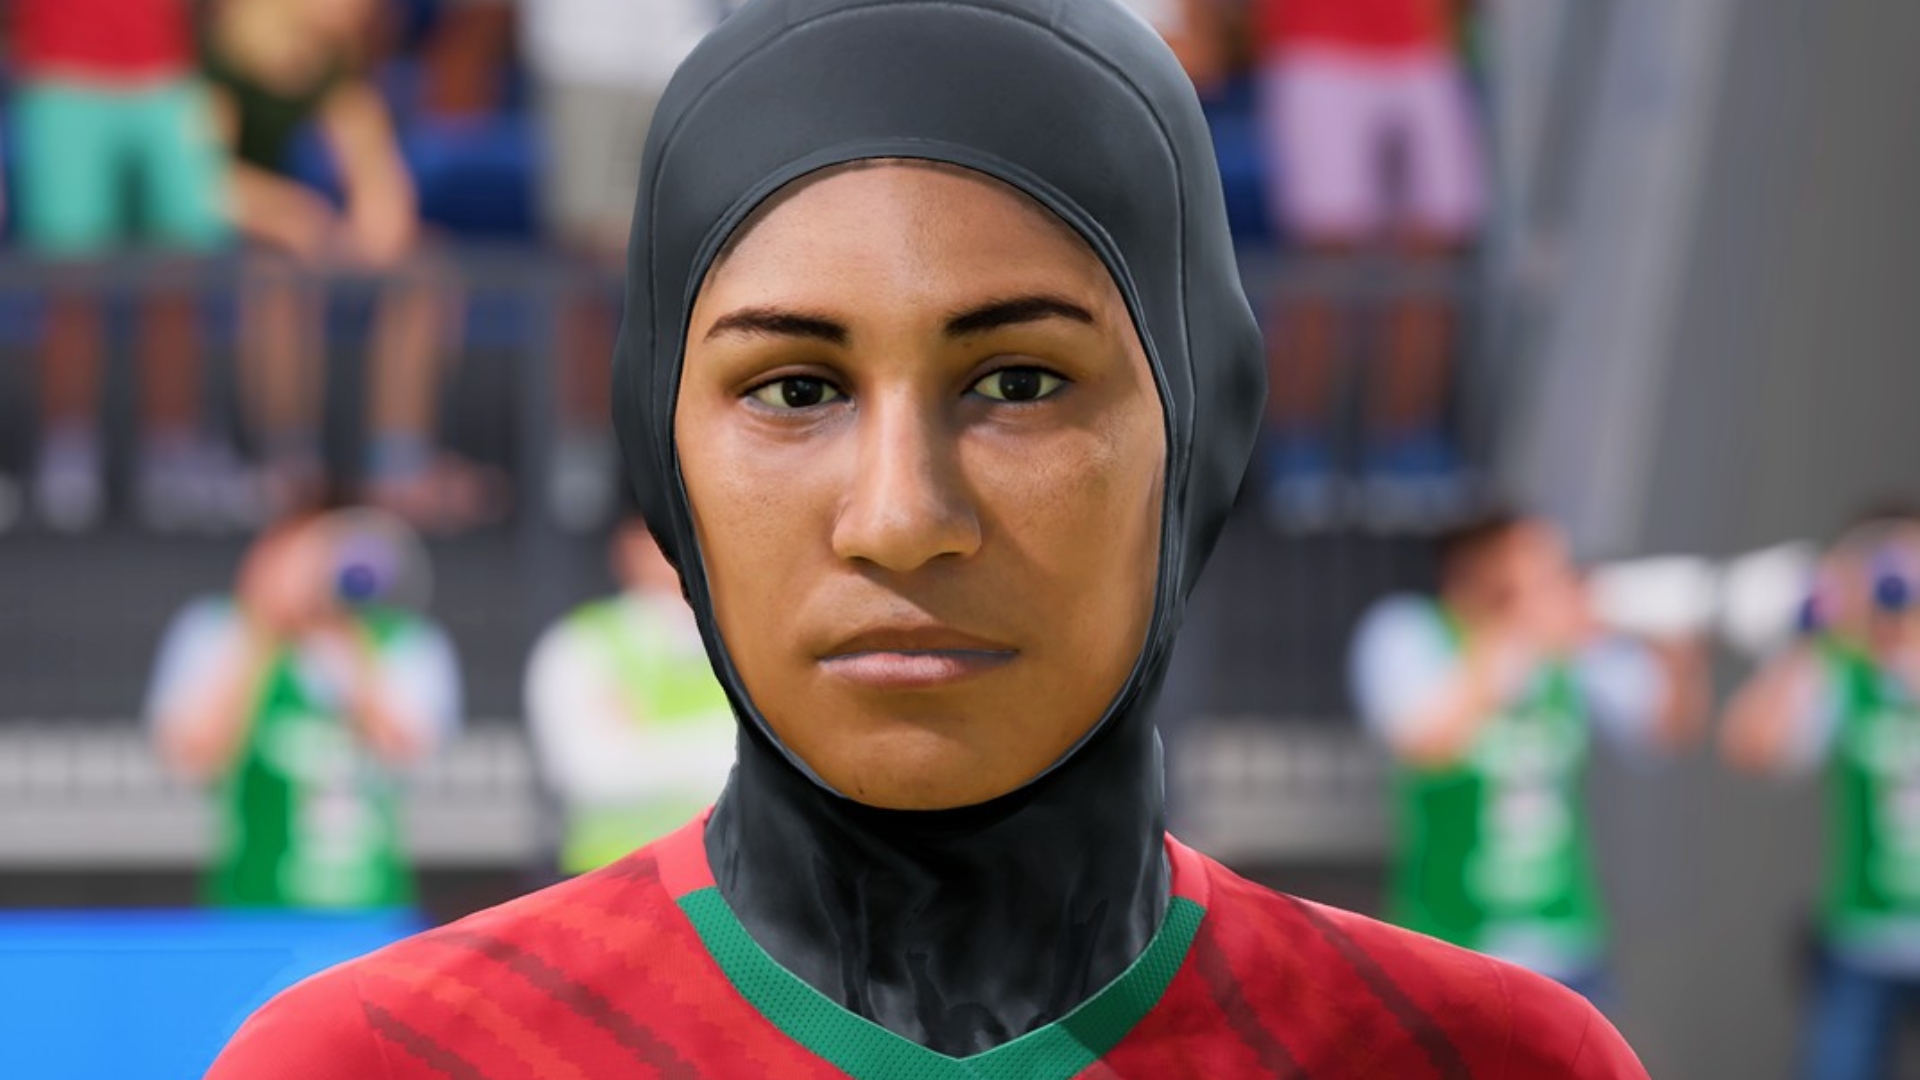 FIFA 23 updates player model to add a hijab